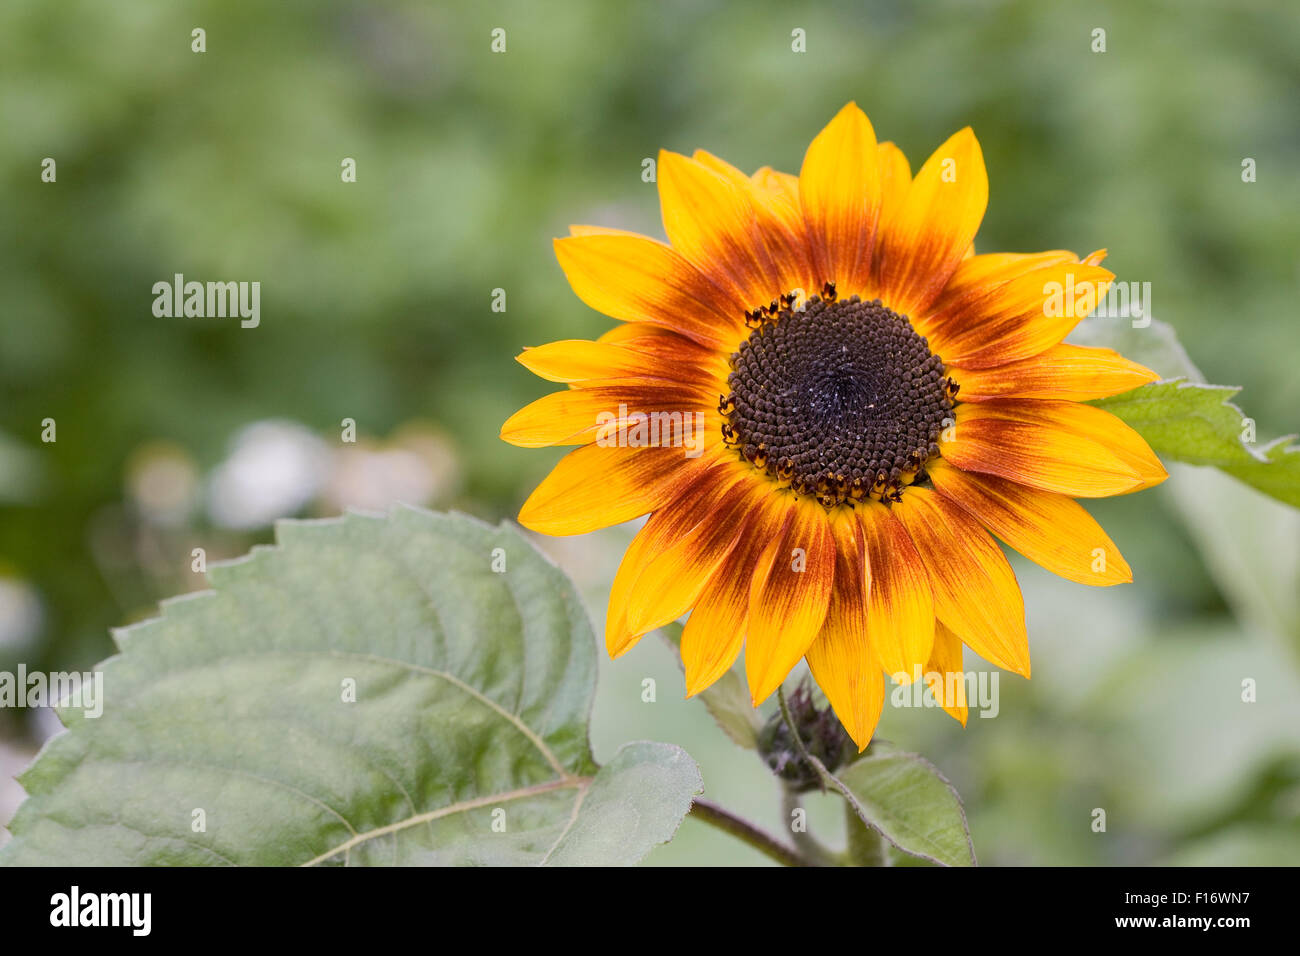 Helianthus annuus. Sunflowers in the garden. Stock Photo